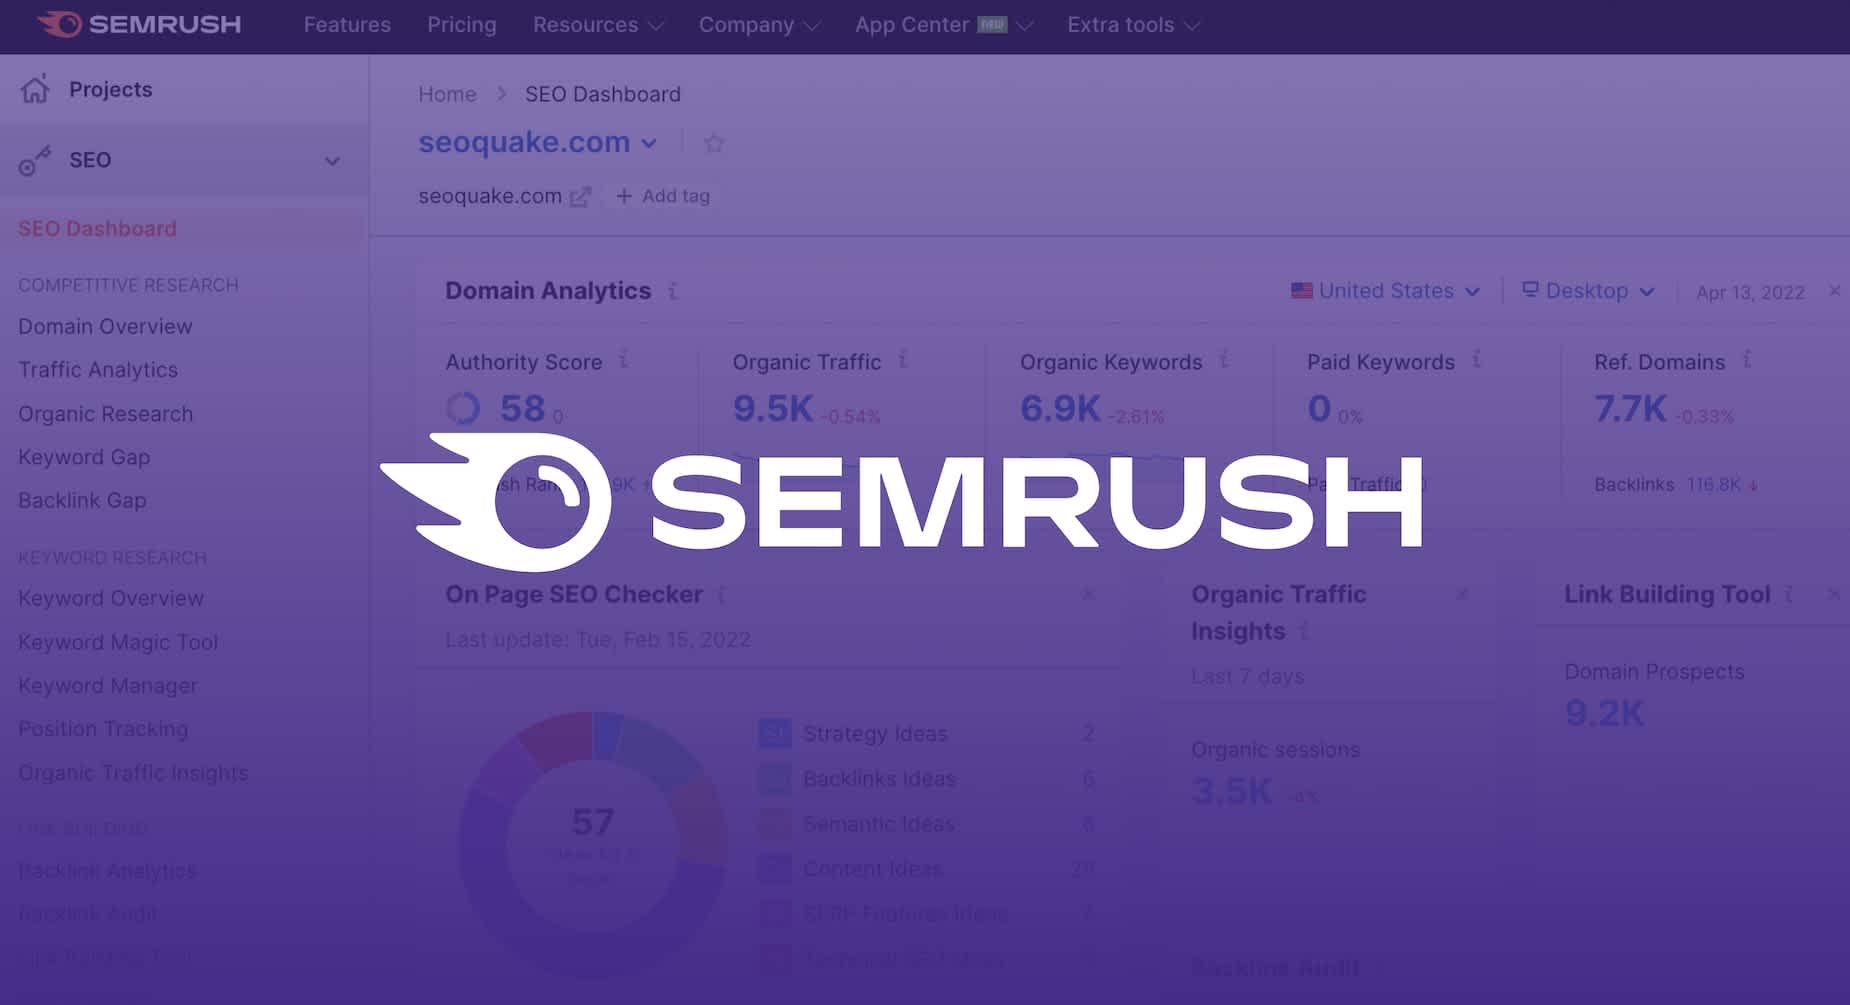 Semrush logo over a purple background